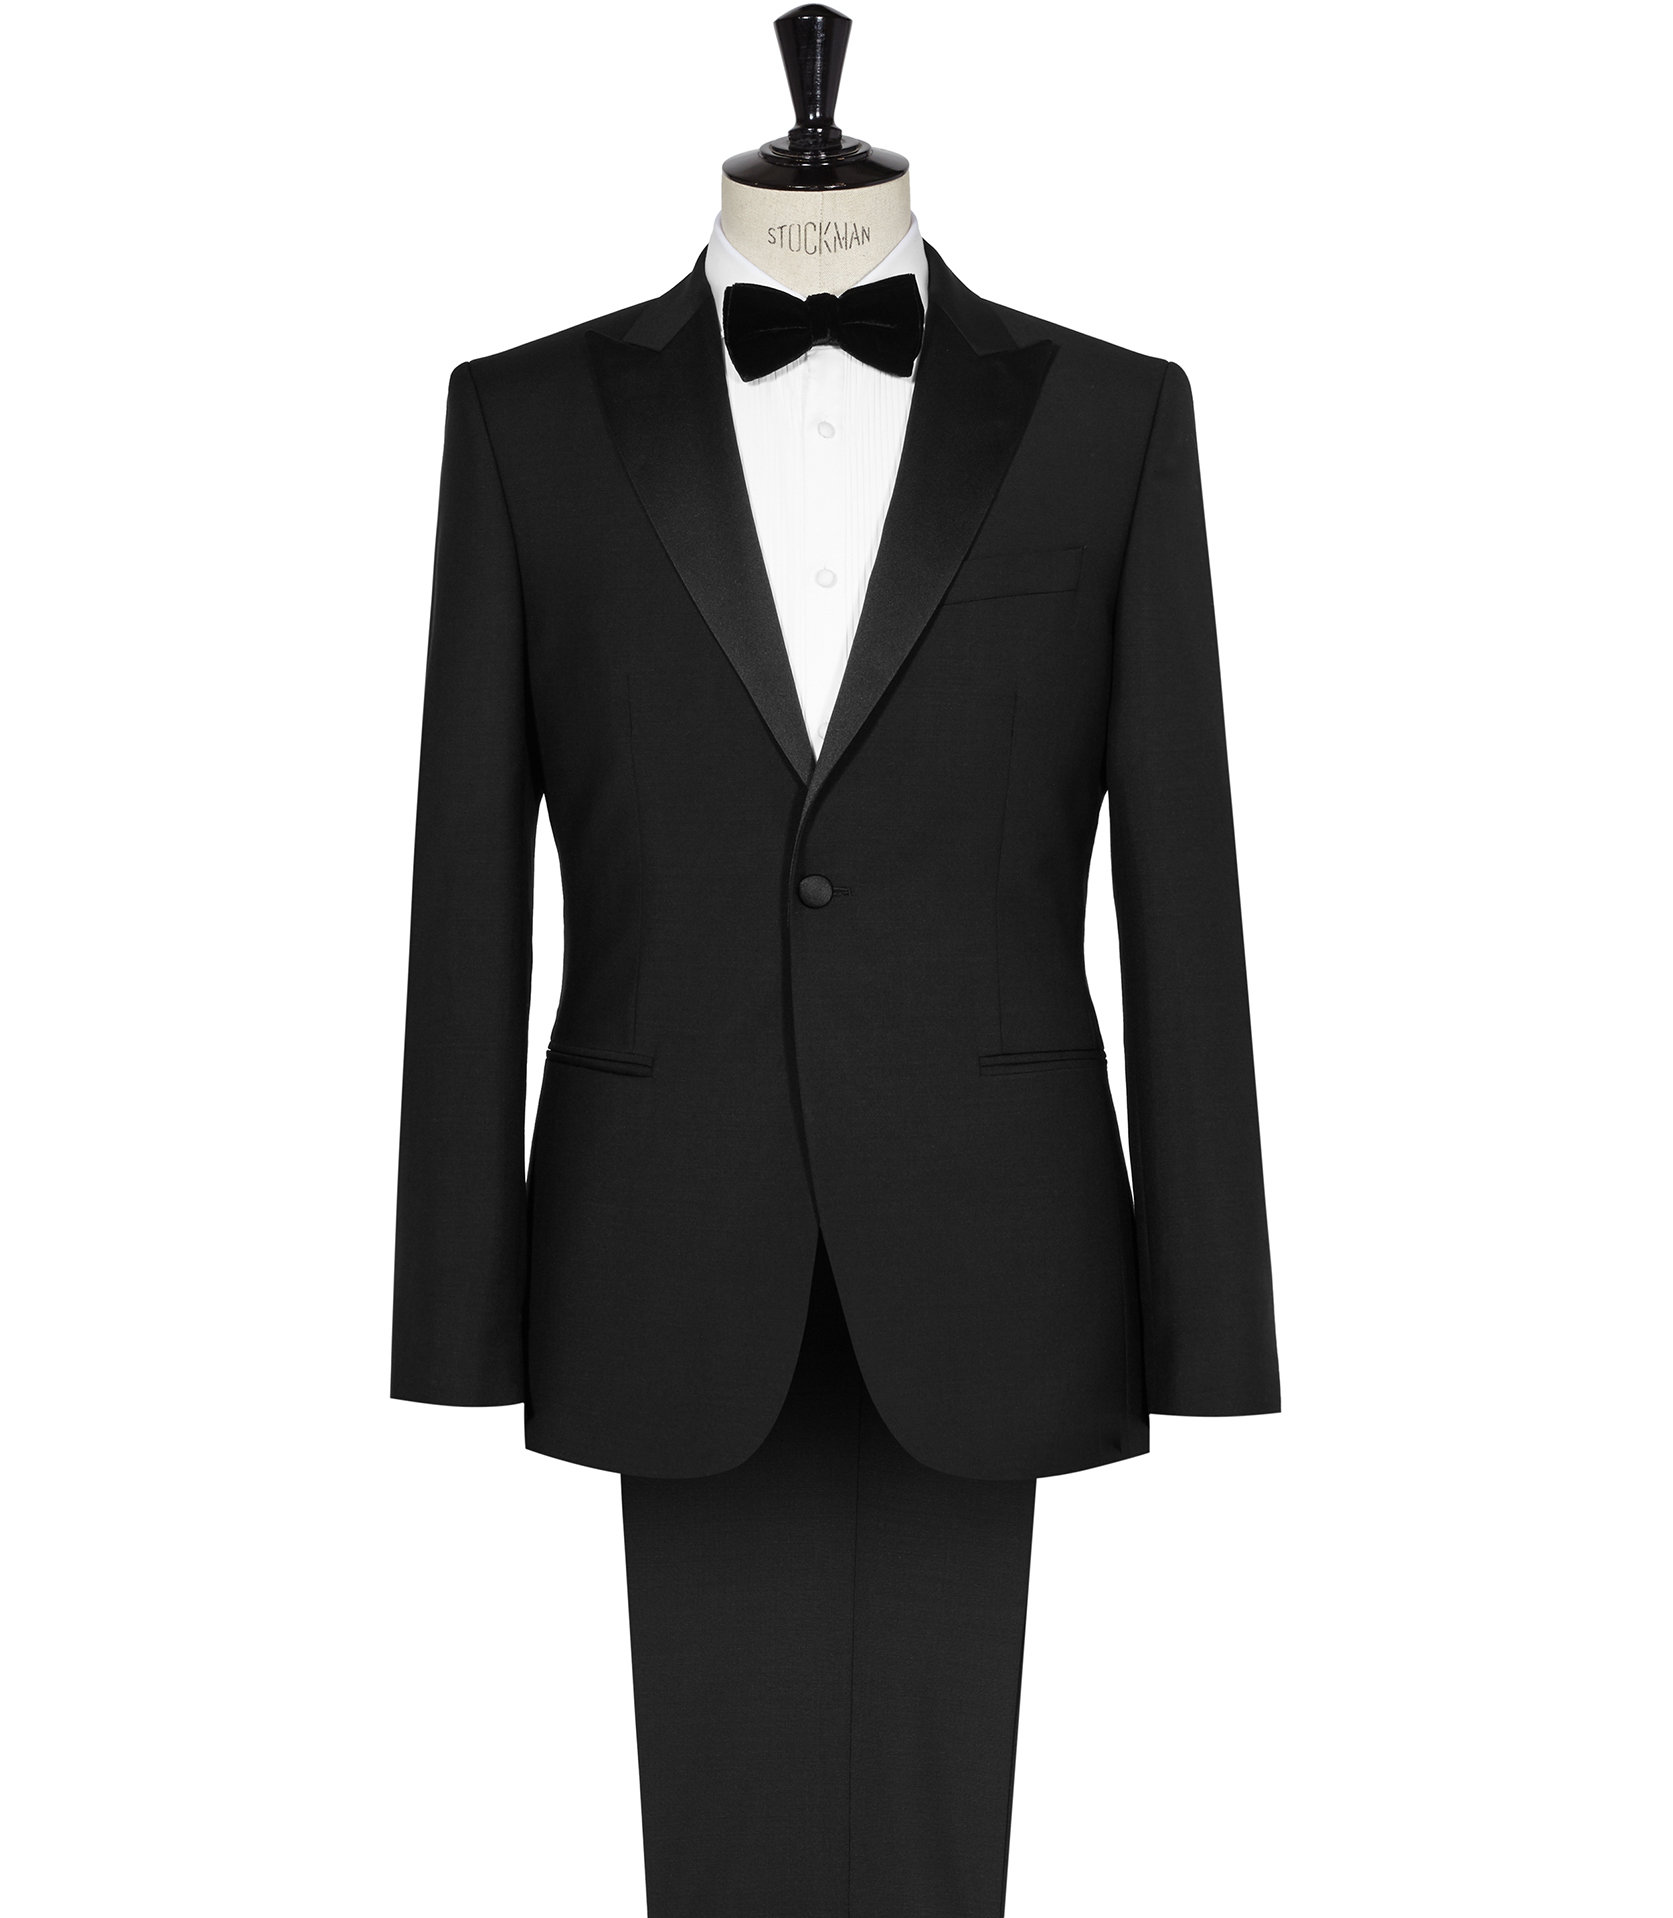 Reiss Black Tuxedo Suit